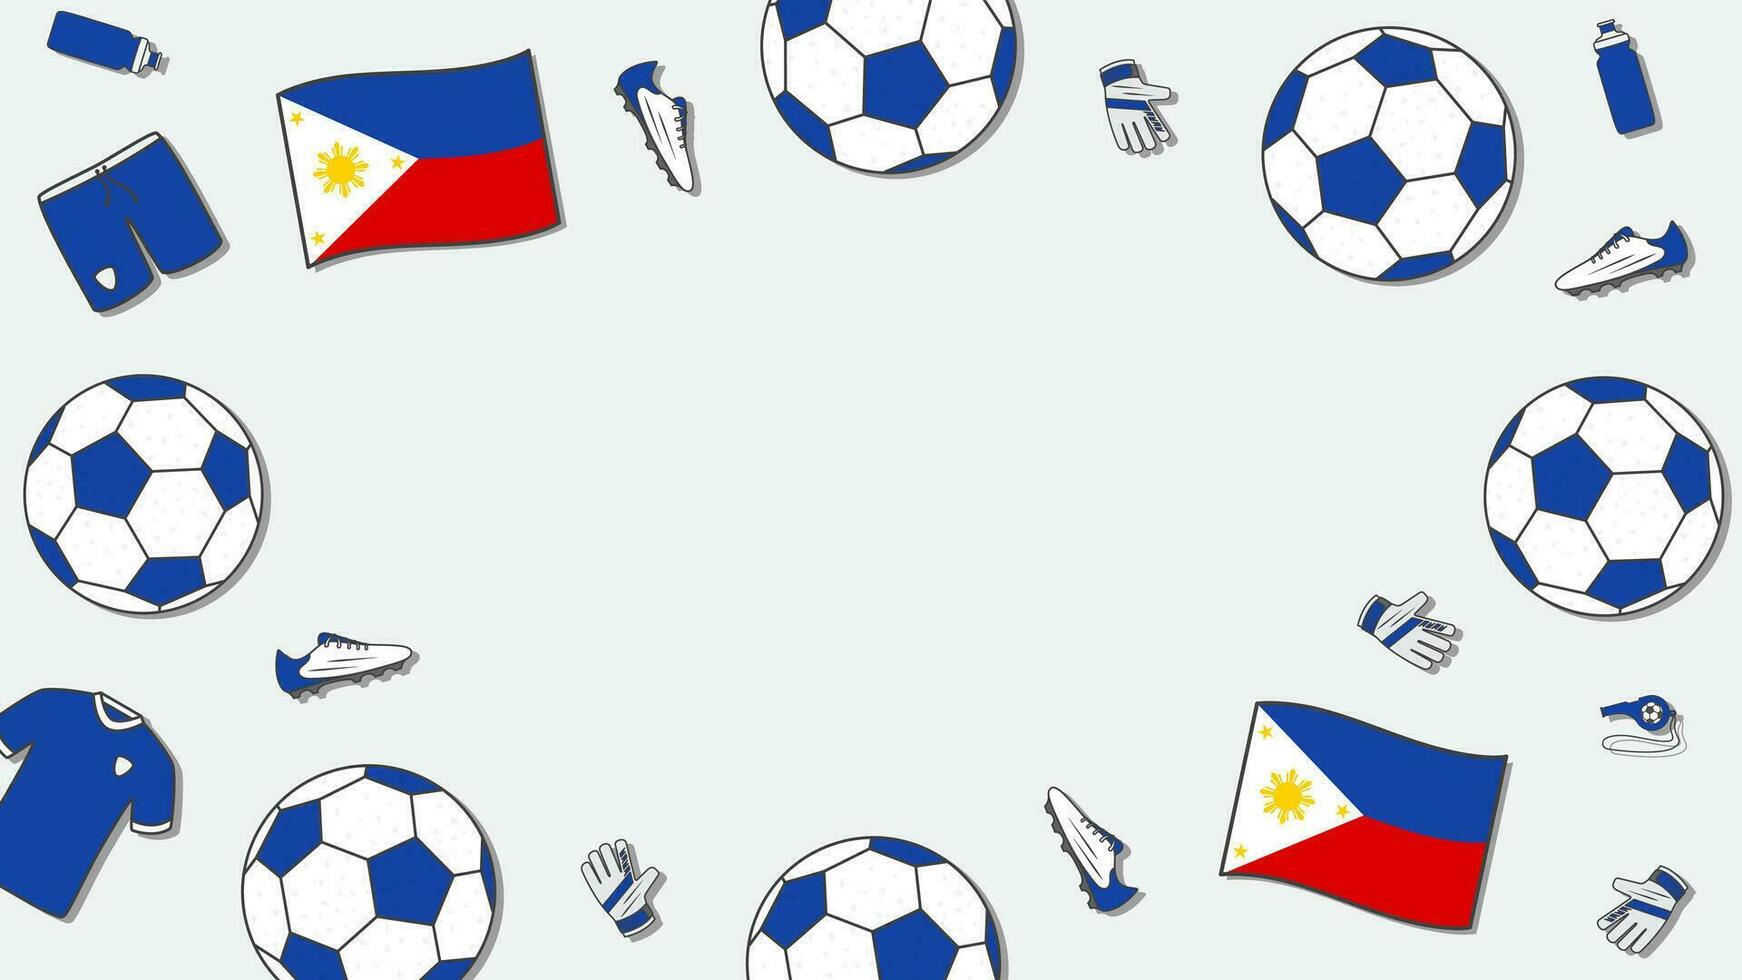 Football Background Design Template. Football Cartoon Vector Illustration. Tournament In Philippines